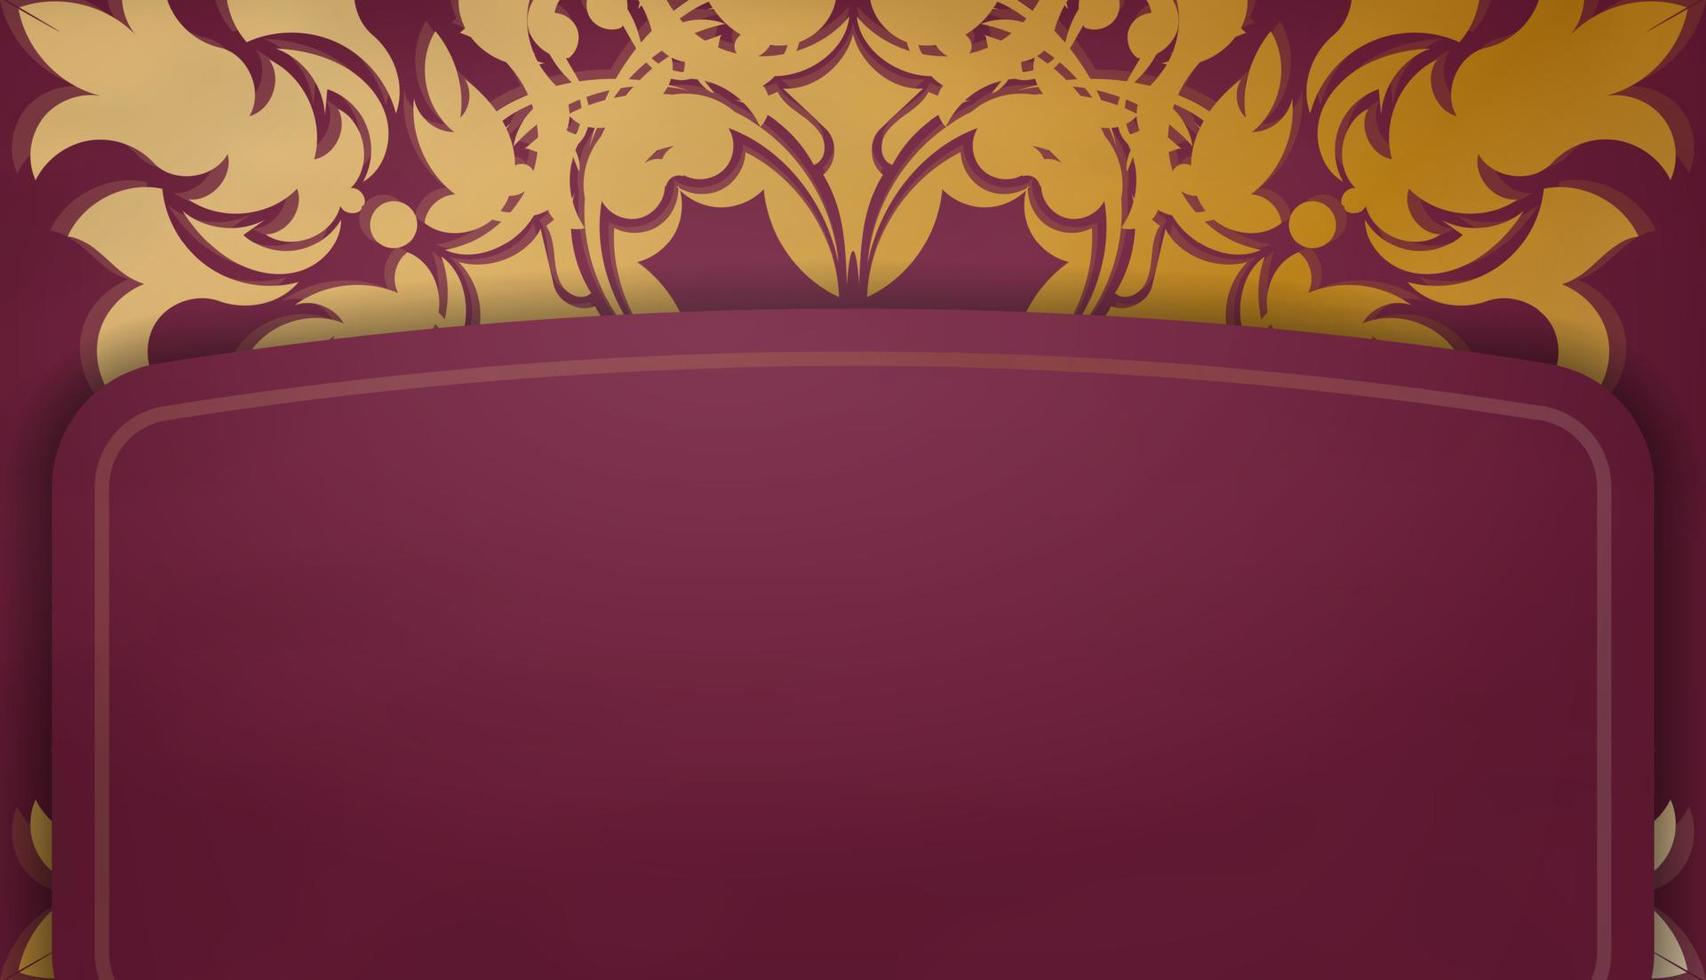 banner cor de vinho com ornamento de ouro vintage para design sob logotipo ou texto vetor